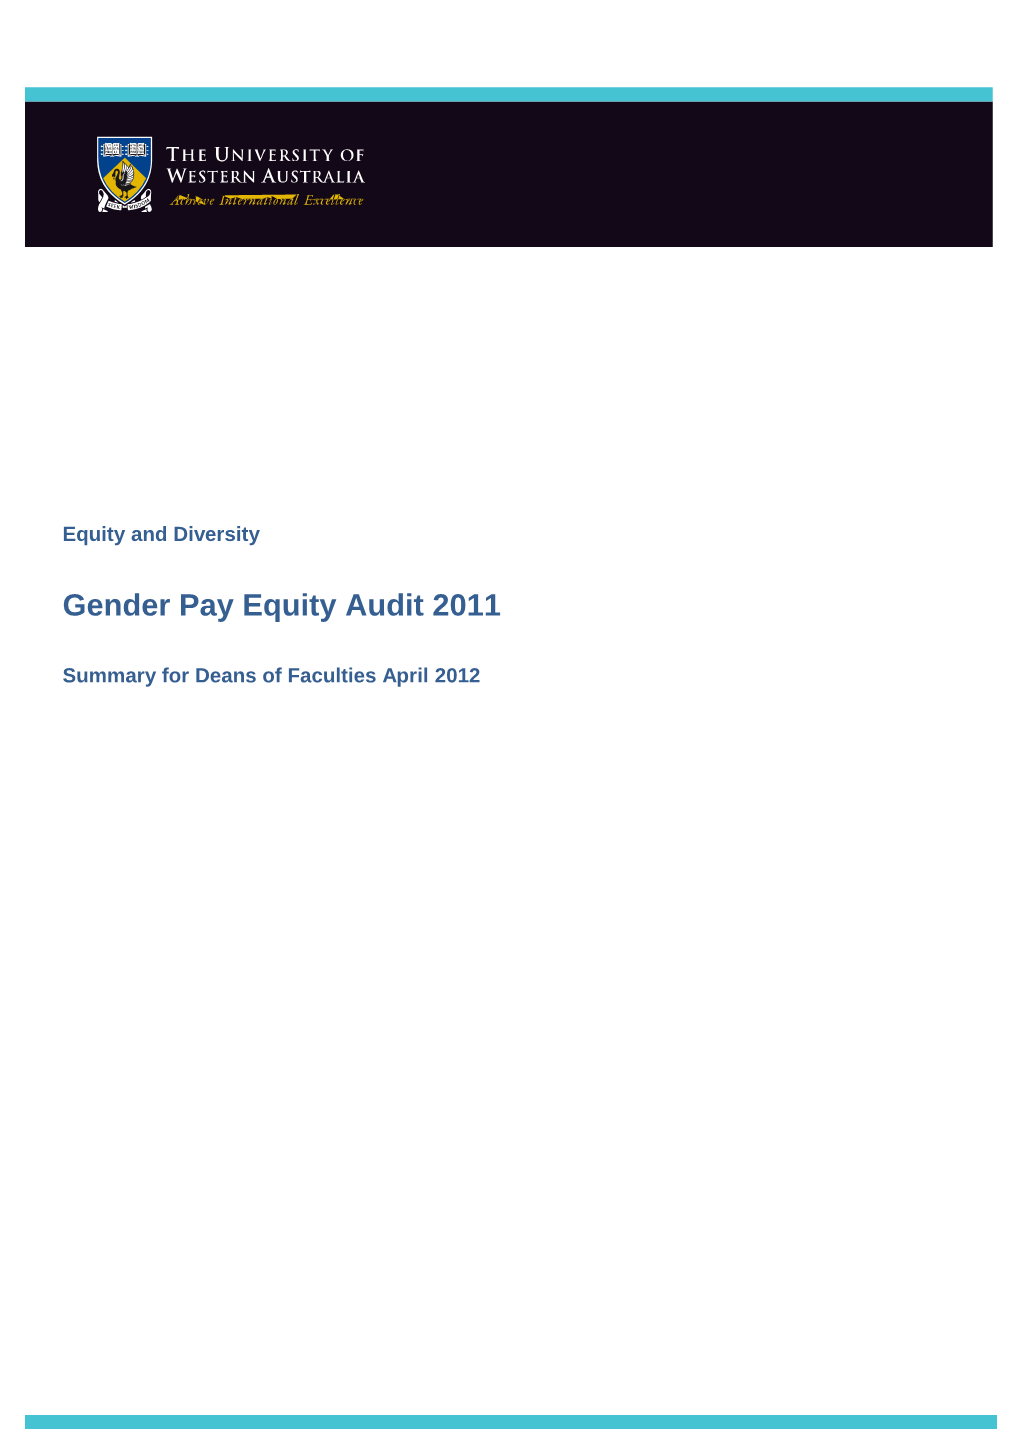 Gender Pay Equity Audit 2011